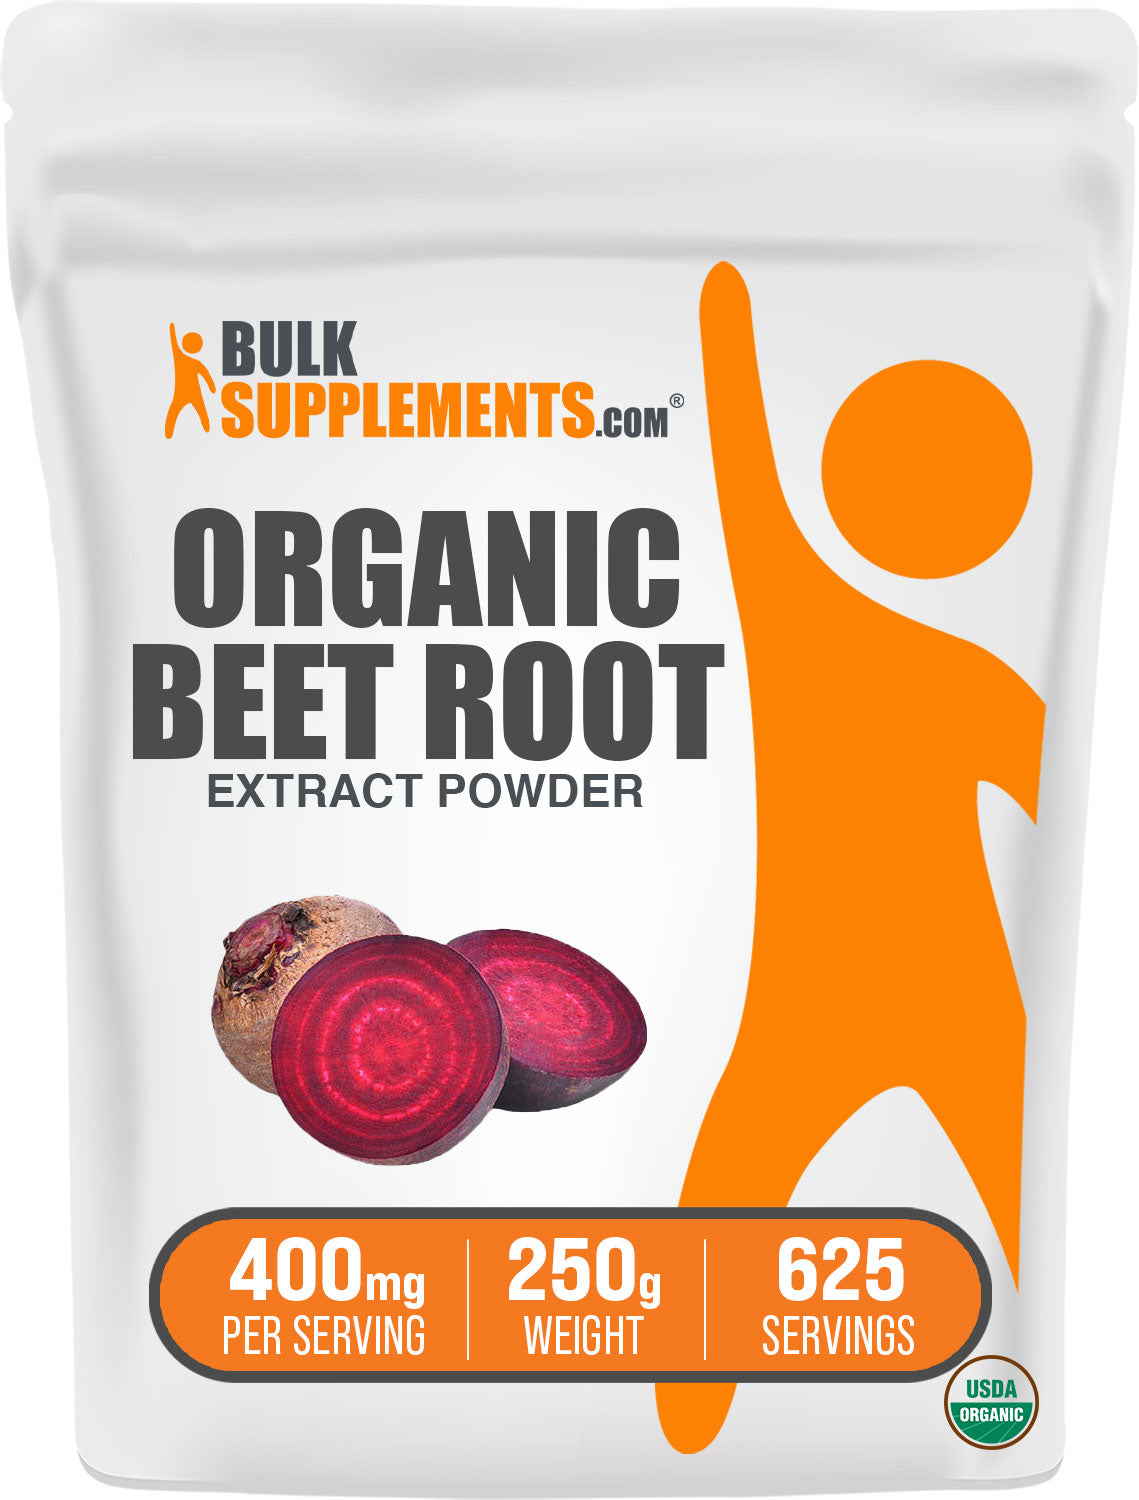 Beet Root Extract Powder 250g Bag